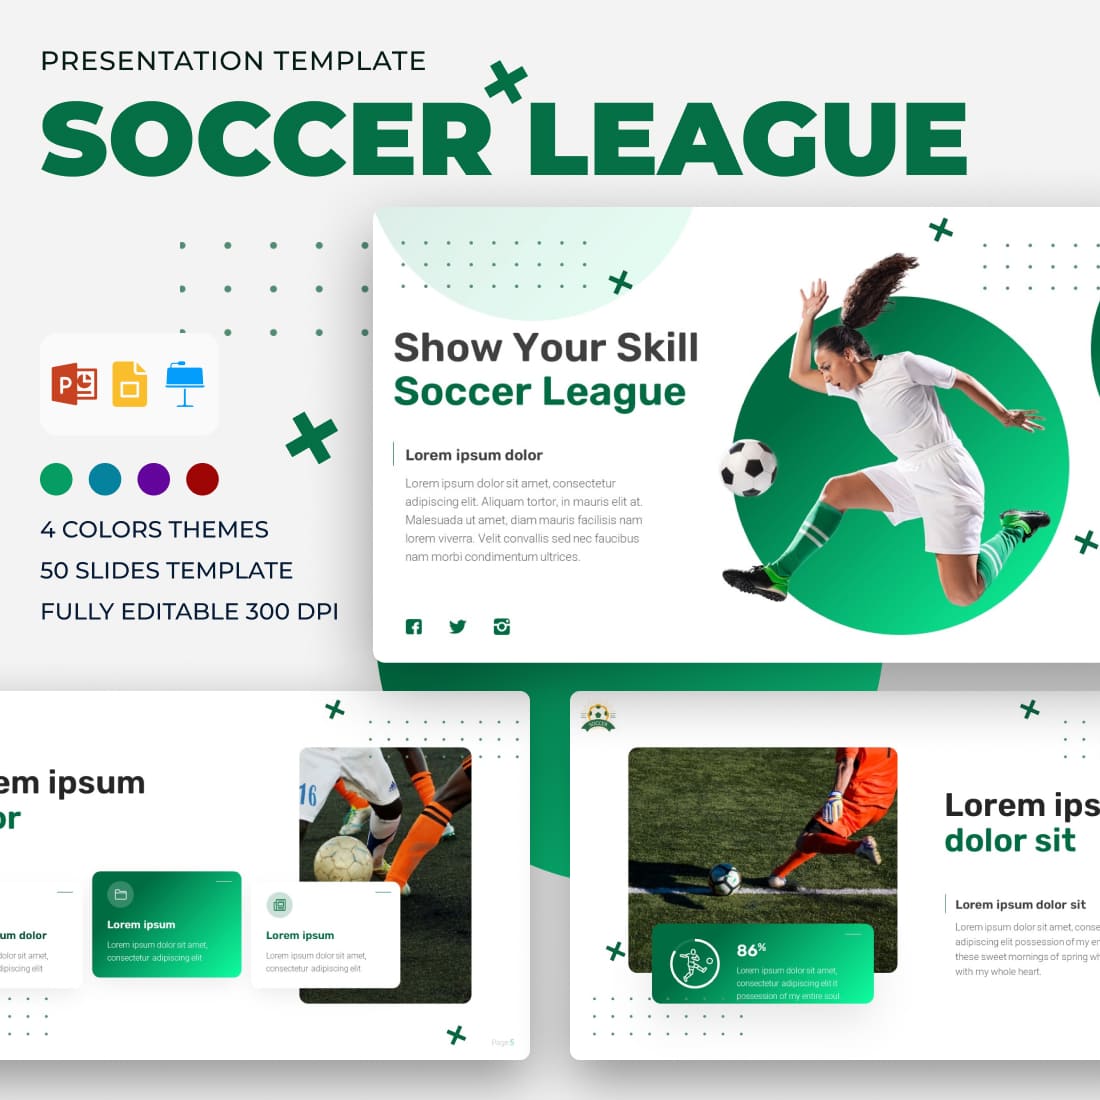 Soccer League Presentation Template.